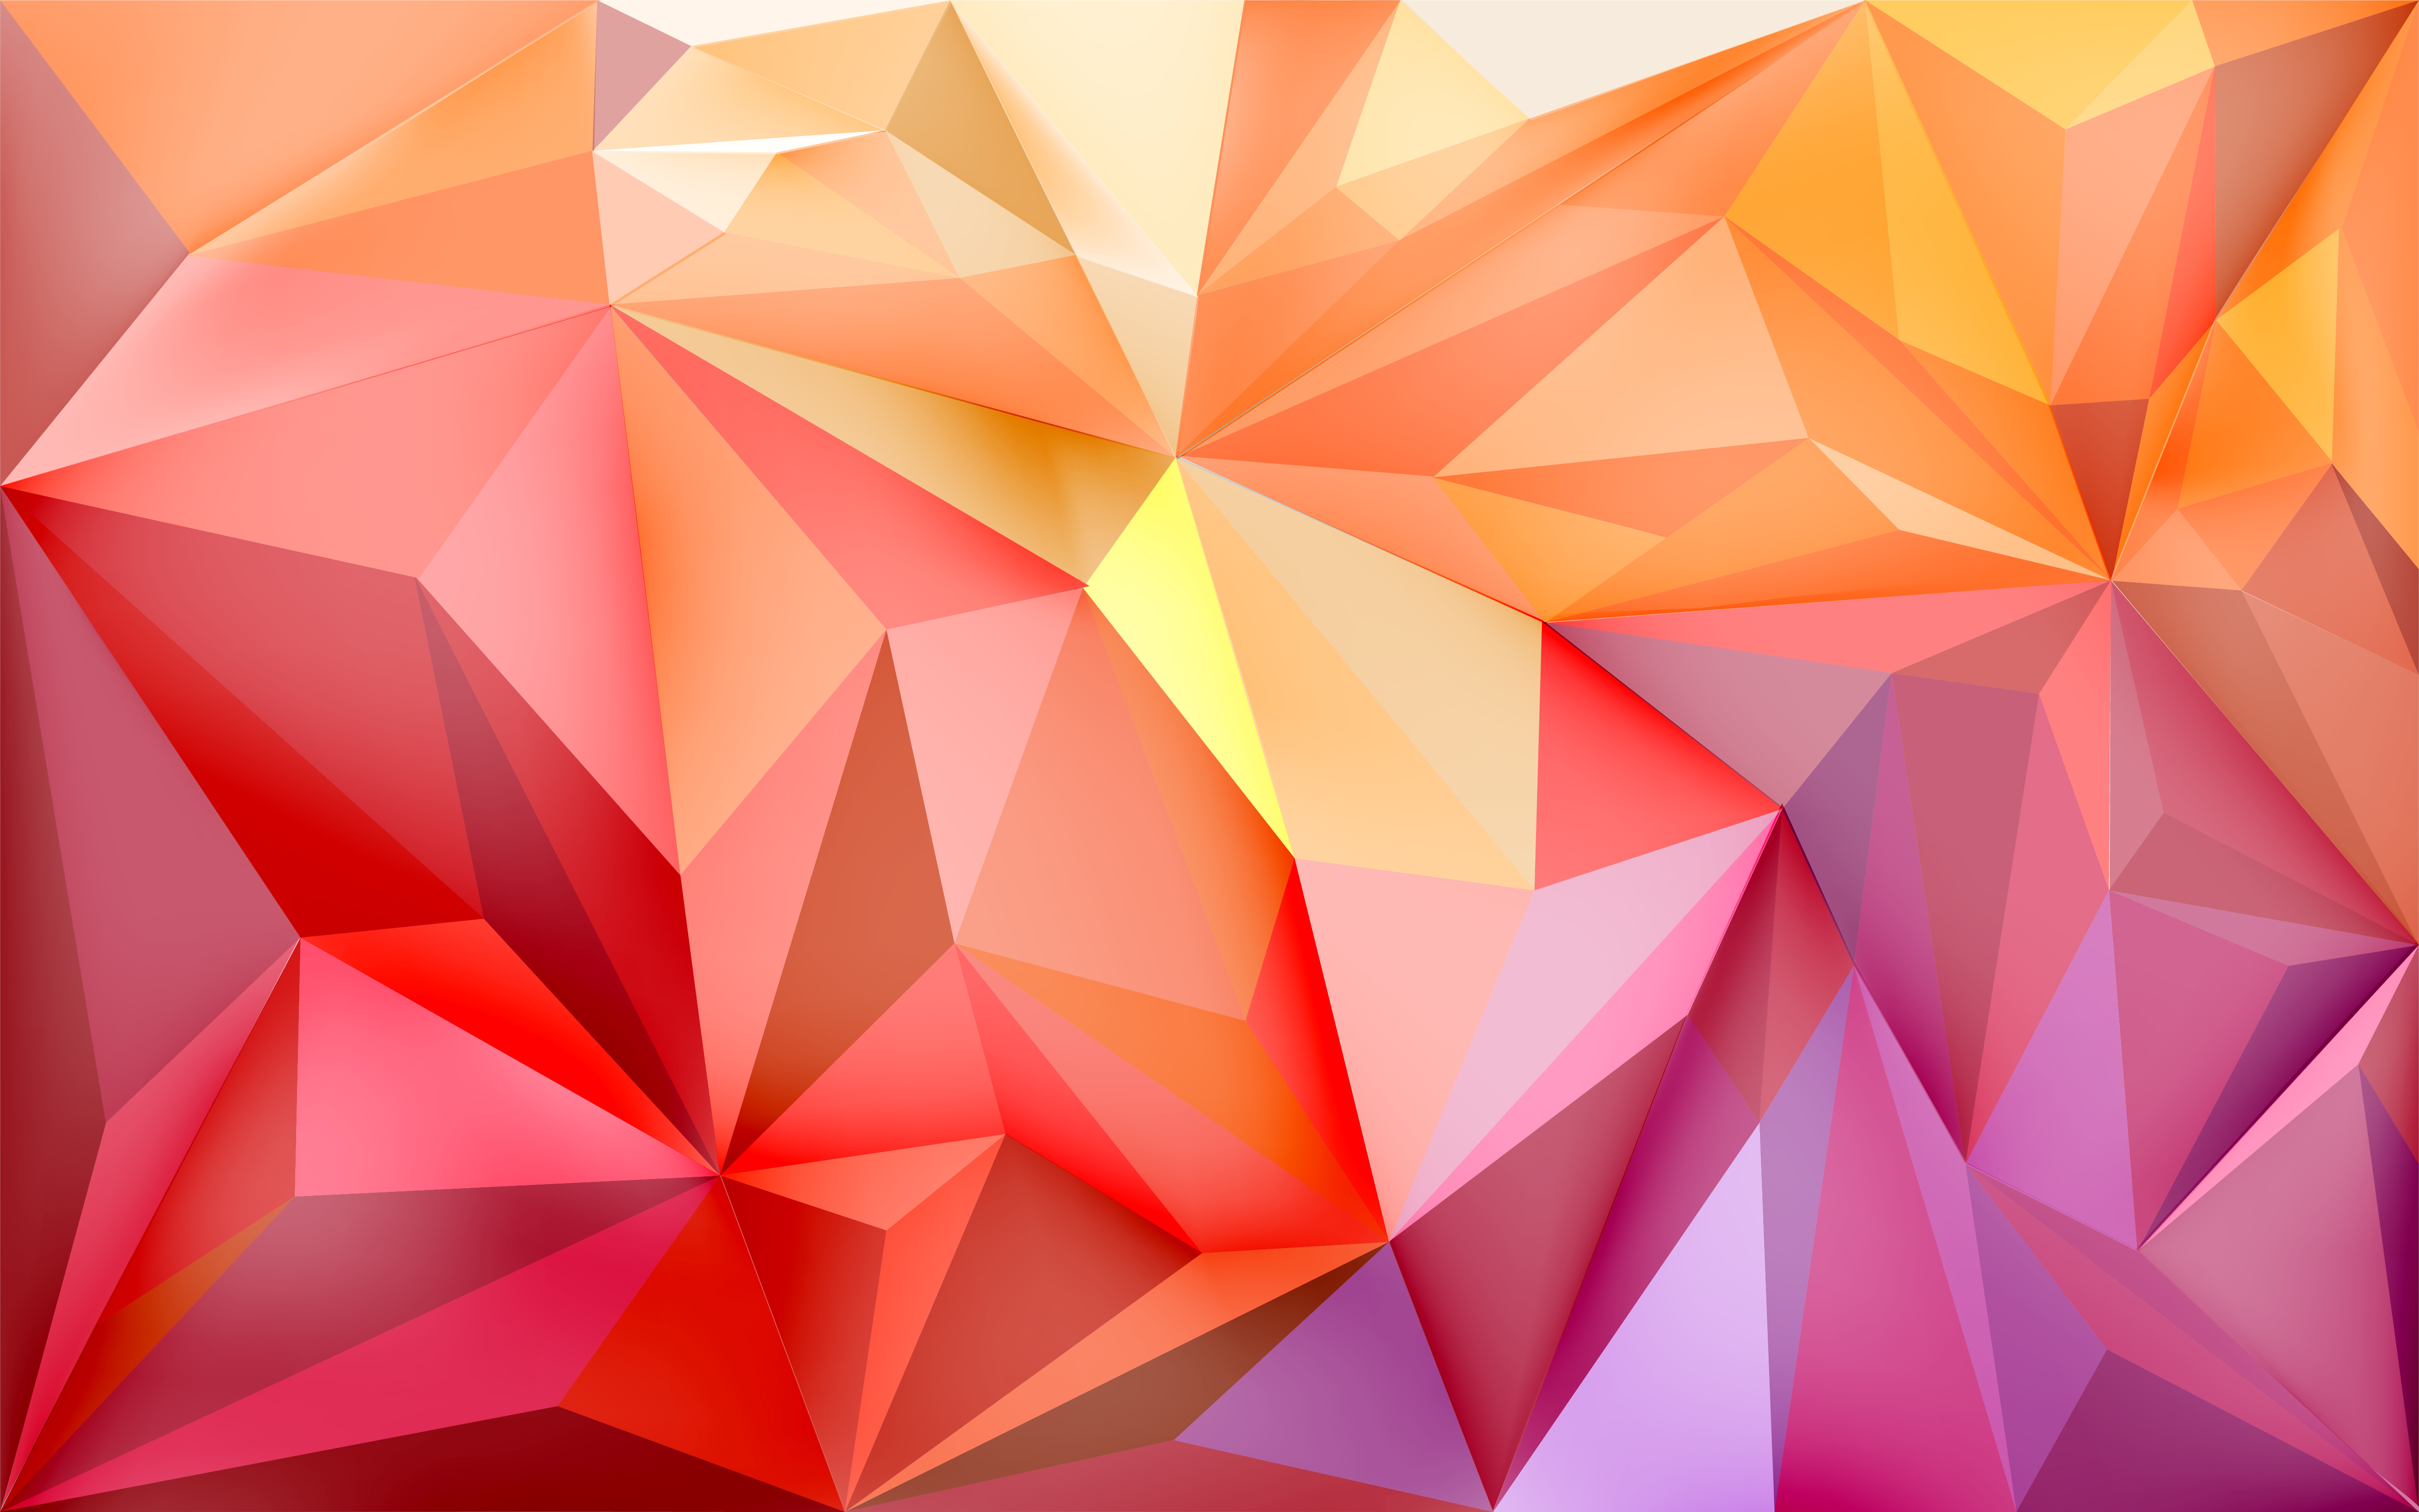 tapete de colores,orange,rosa,dreieck,muster,design